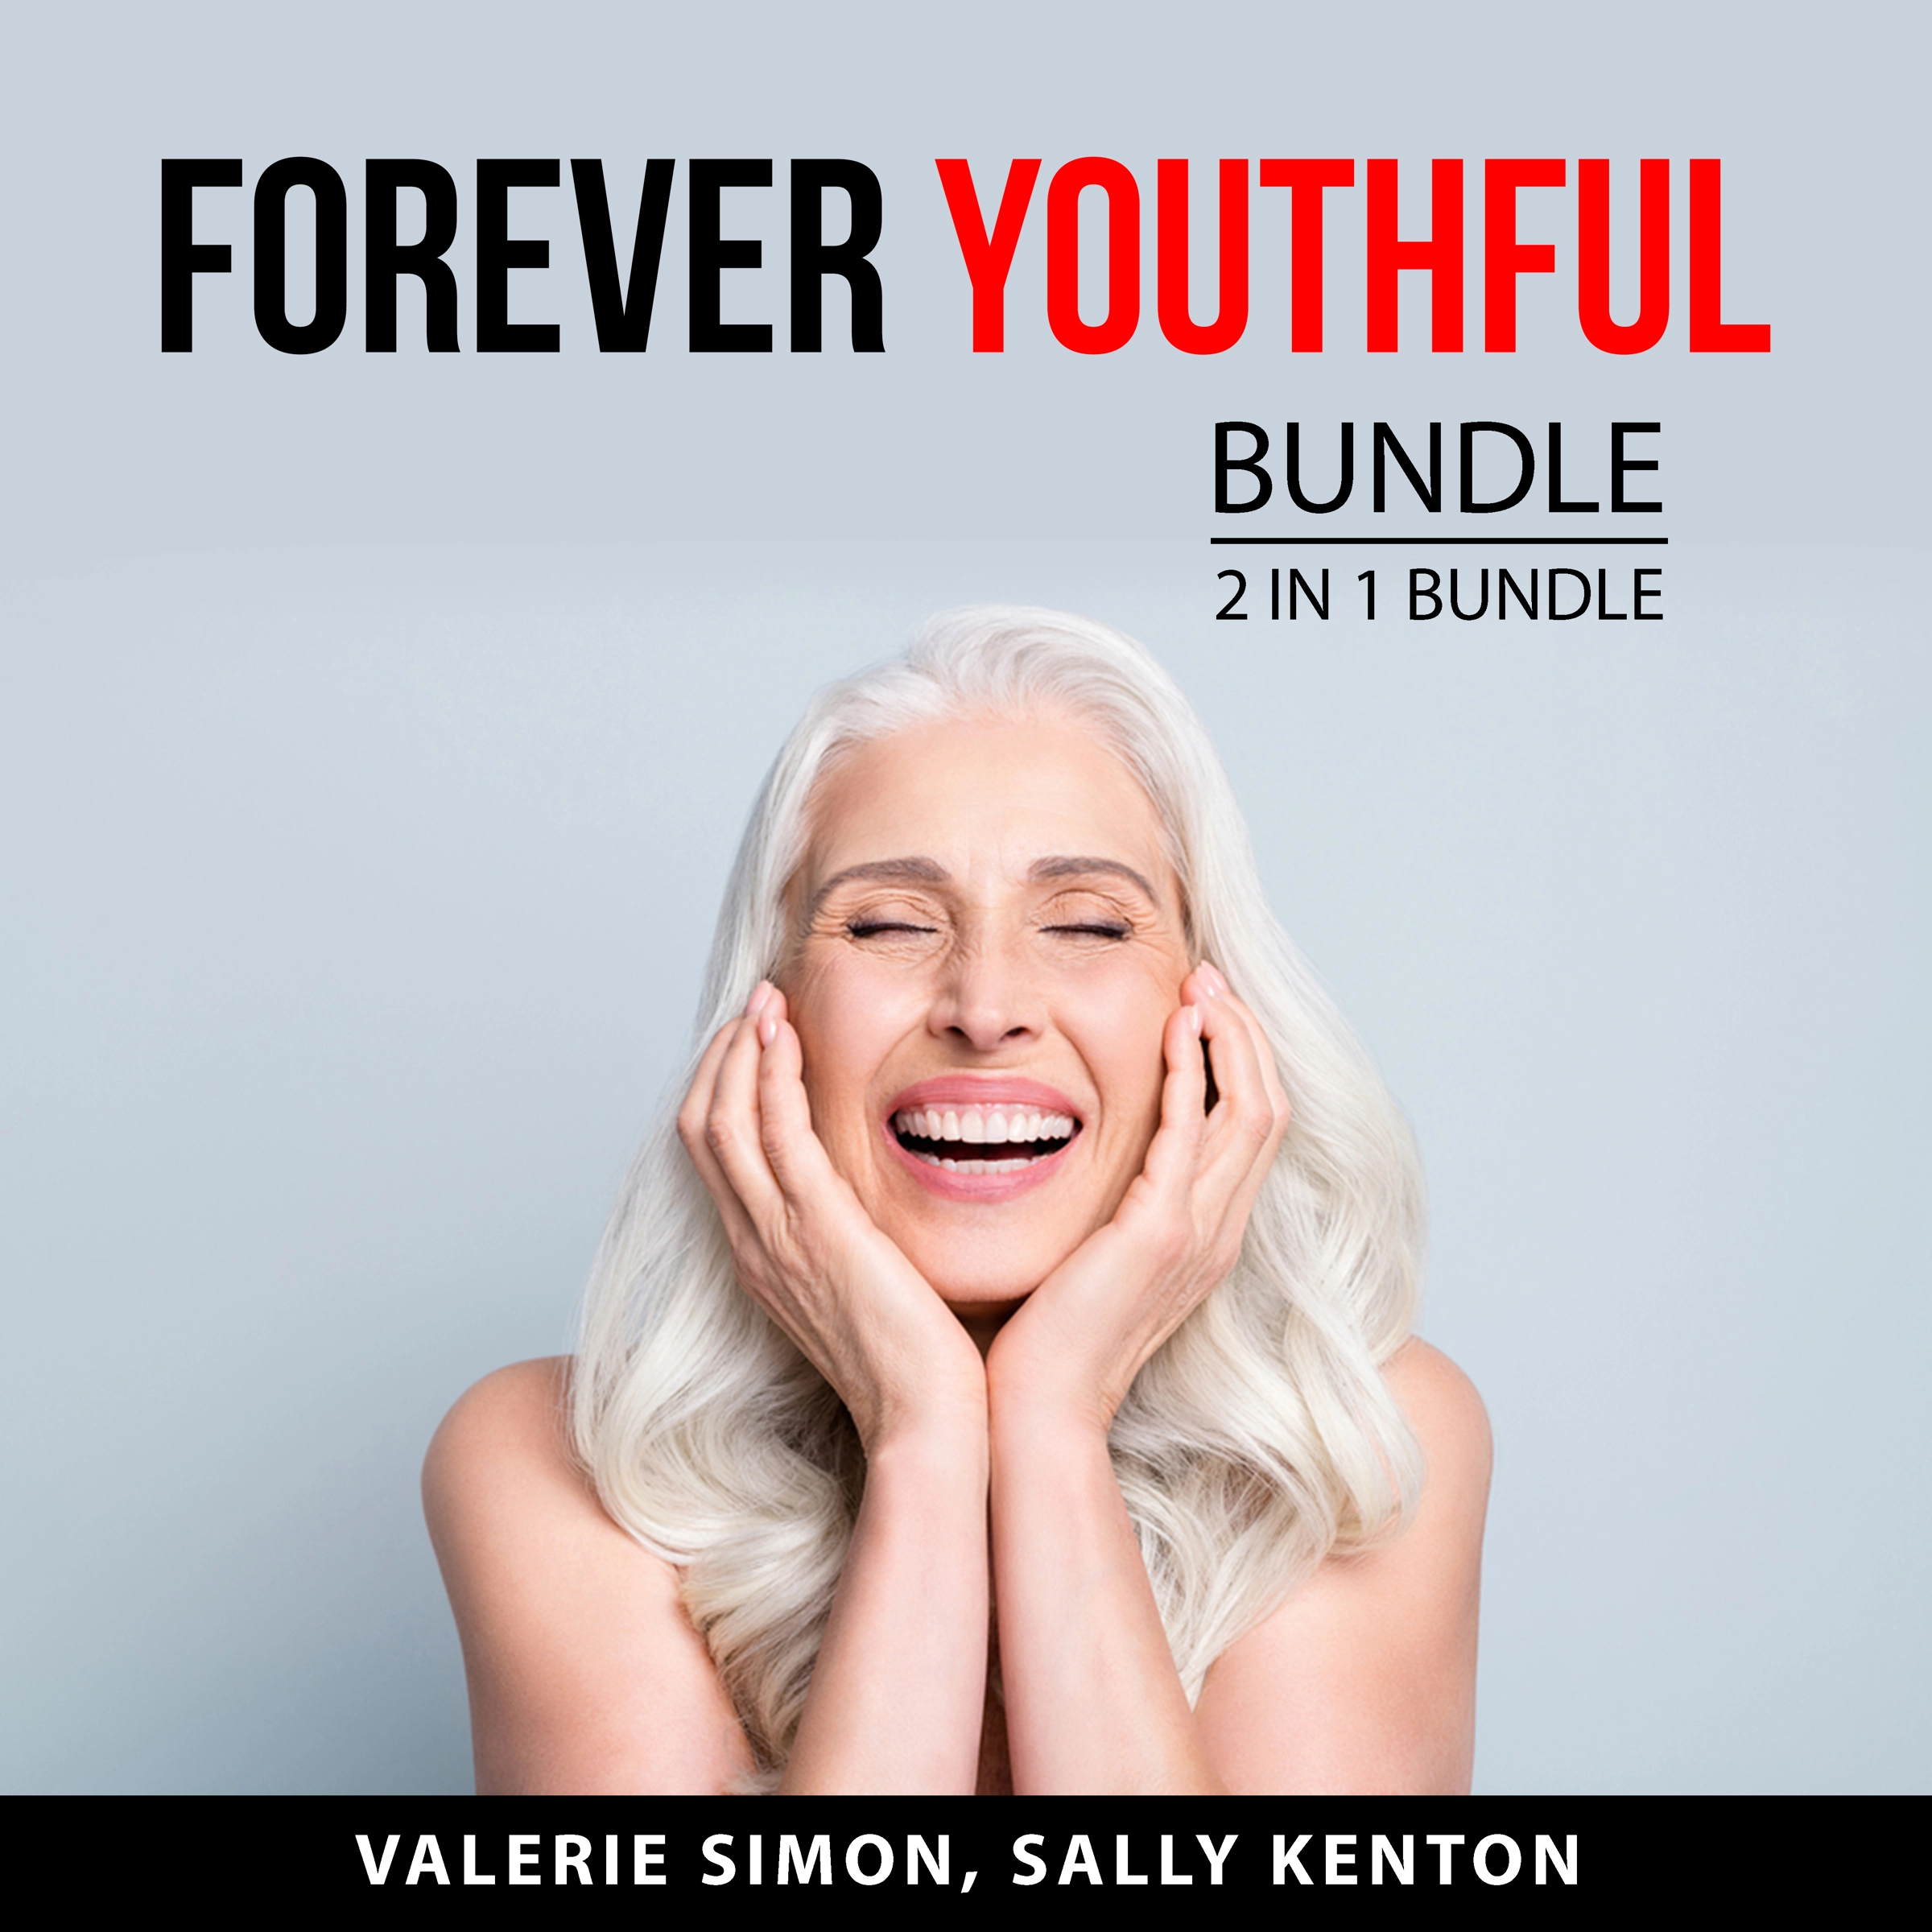 Forever Youthful Bundle, 2 in 1 Bundle Audiobook by Sally Kenton